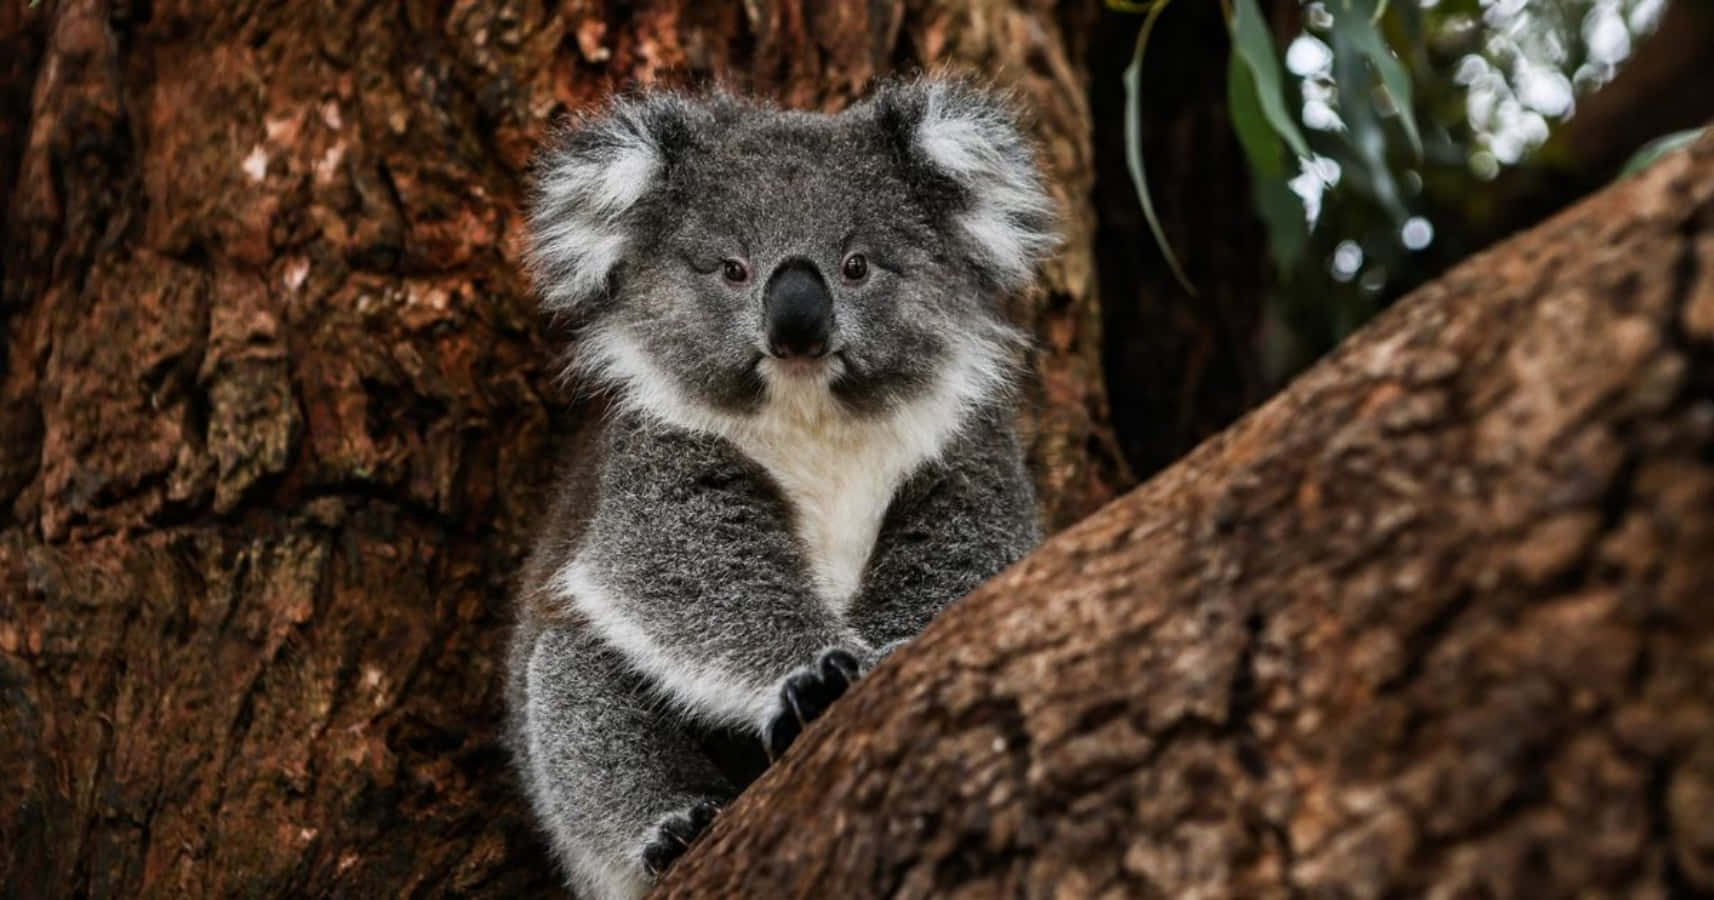 A koala bear takes a nap in a tree